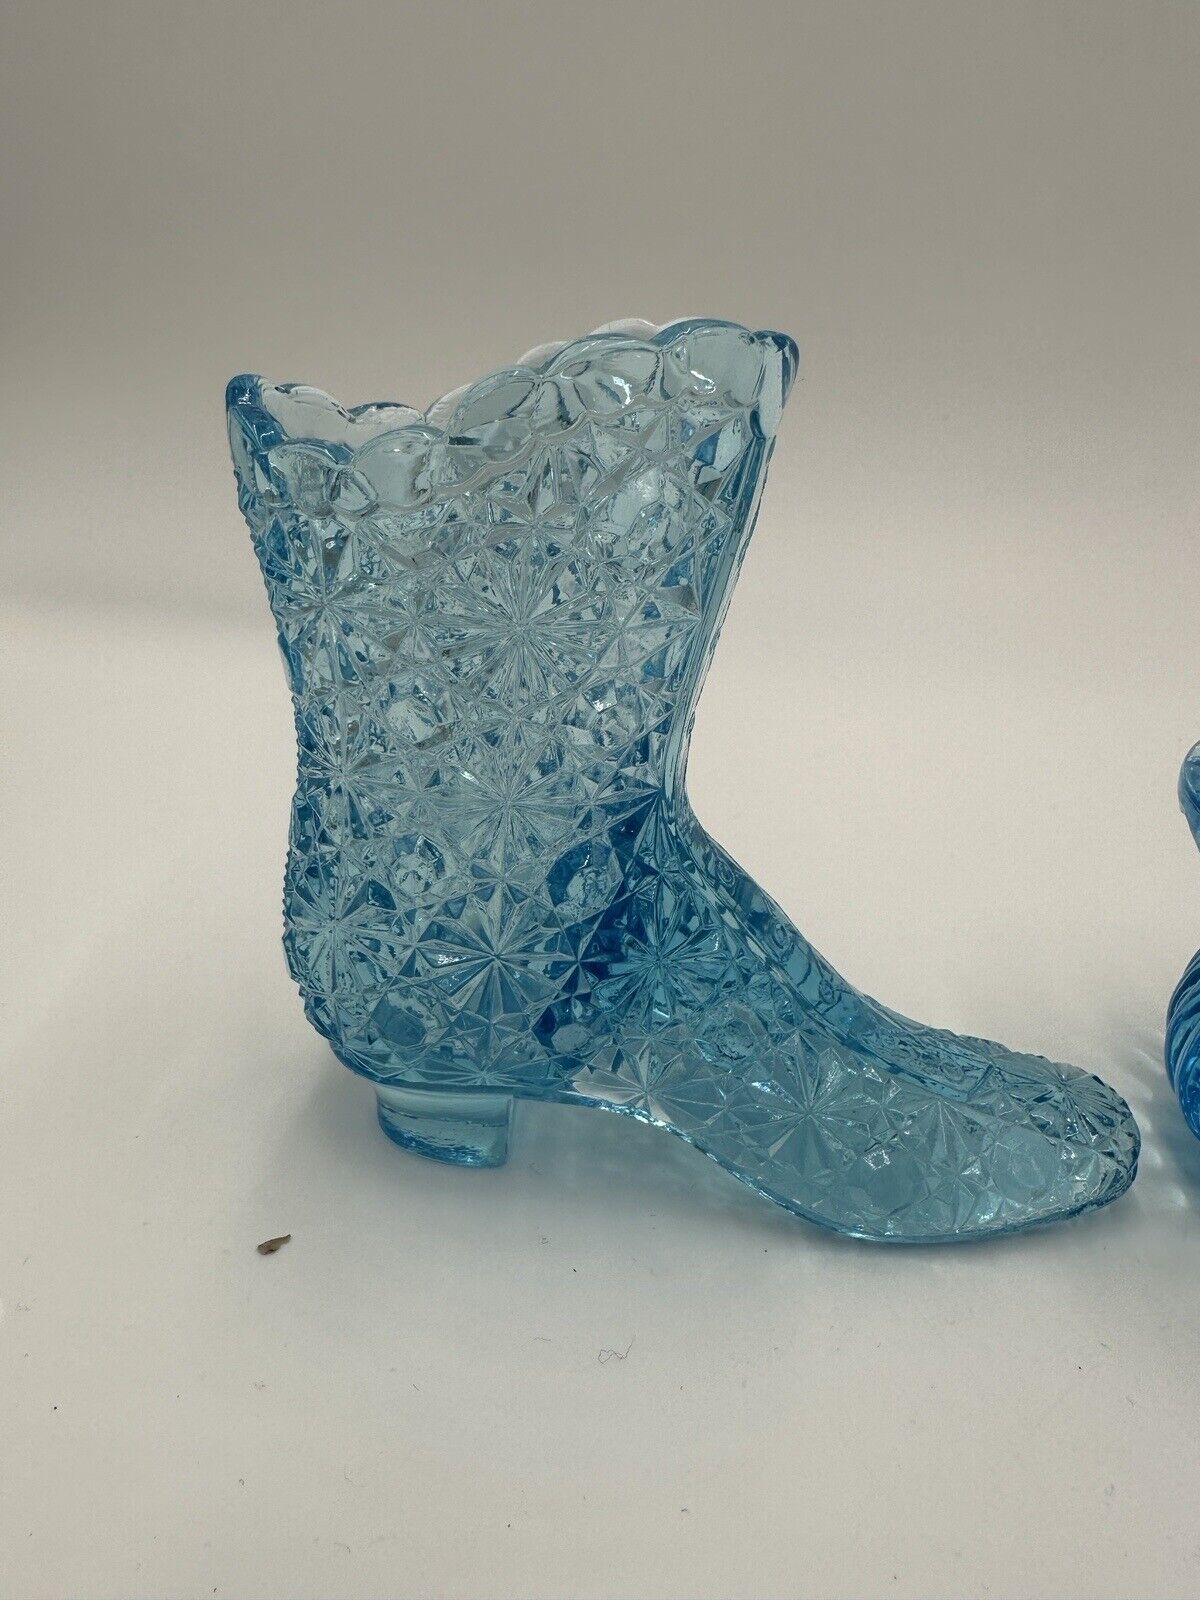 Fenton Glass Slippers Victorian Shoes Mini Vase Ser Vintage Aqua Blue Art